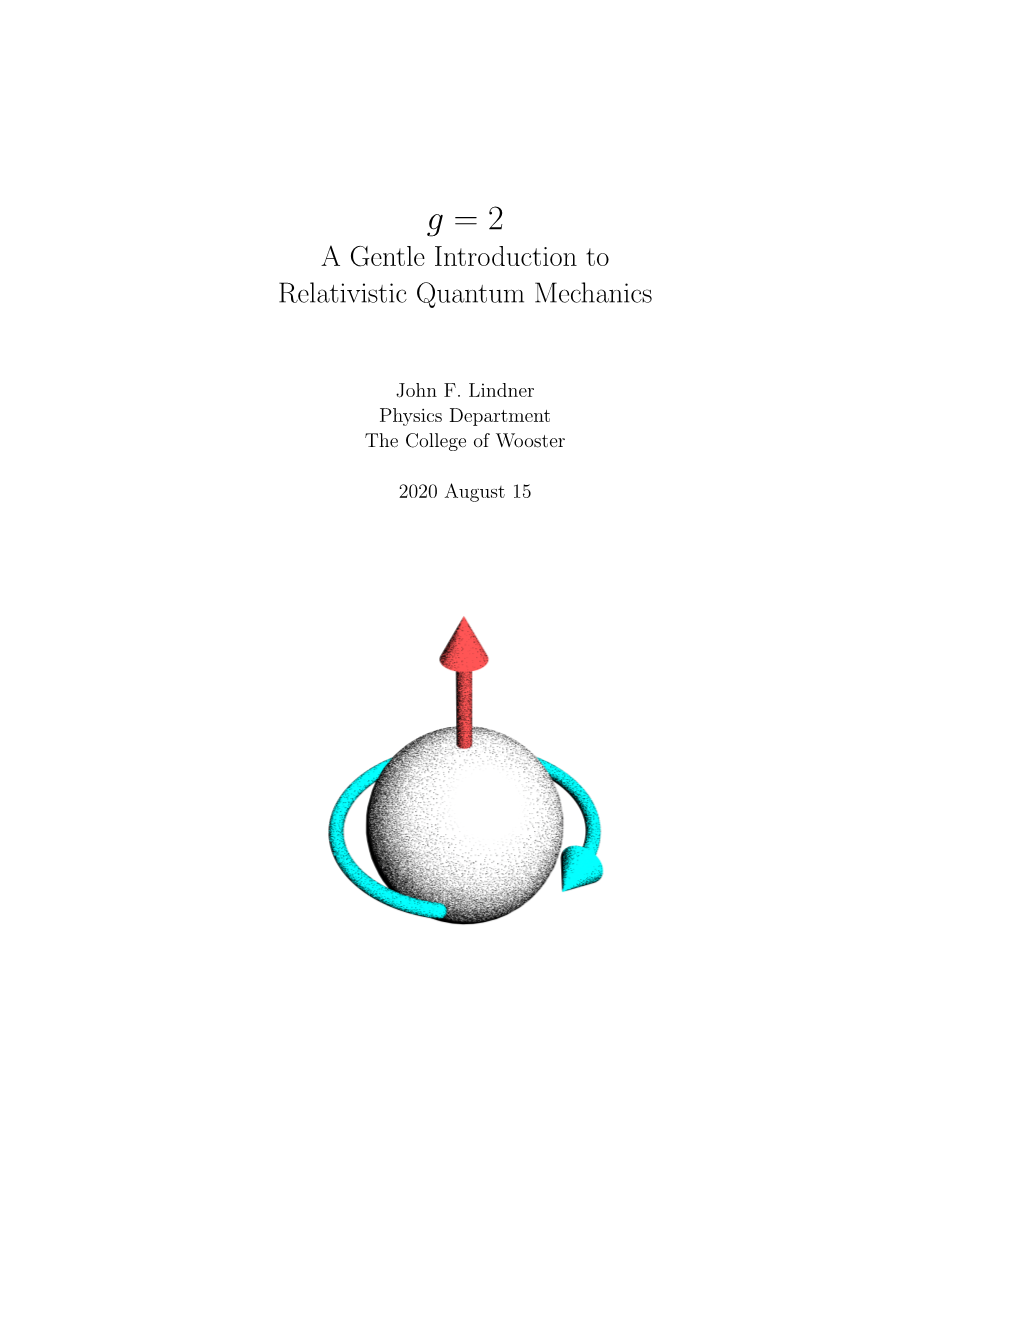 A Gentle Introduction to Relativistic Quantum Mechanics